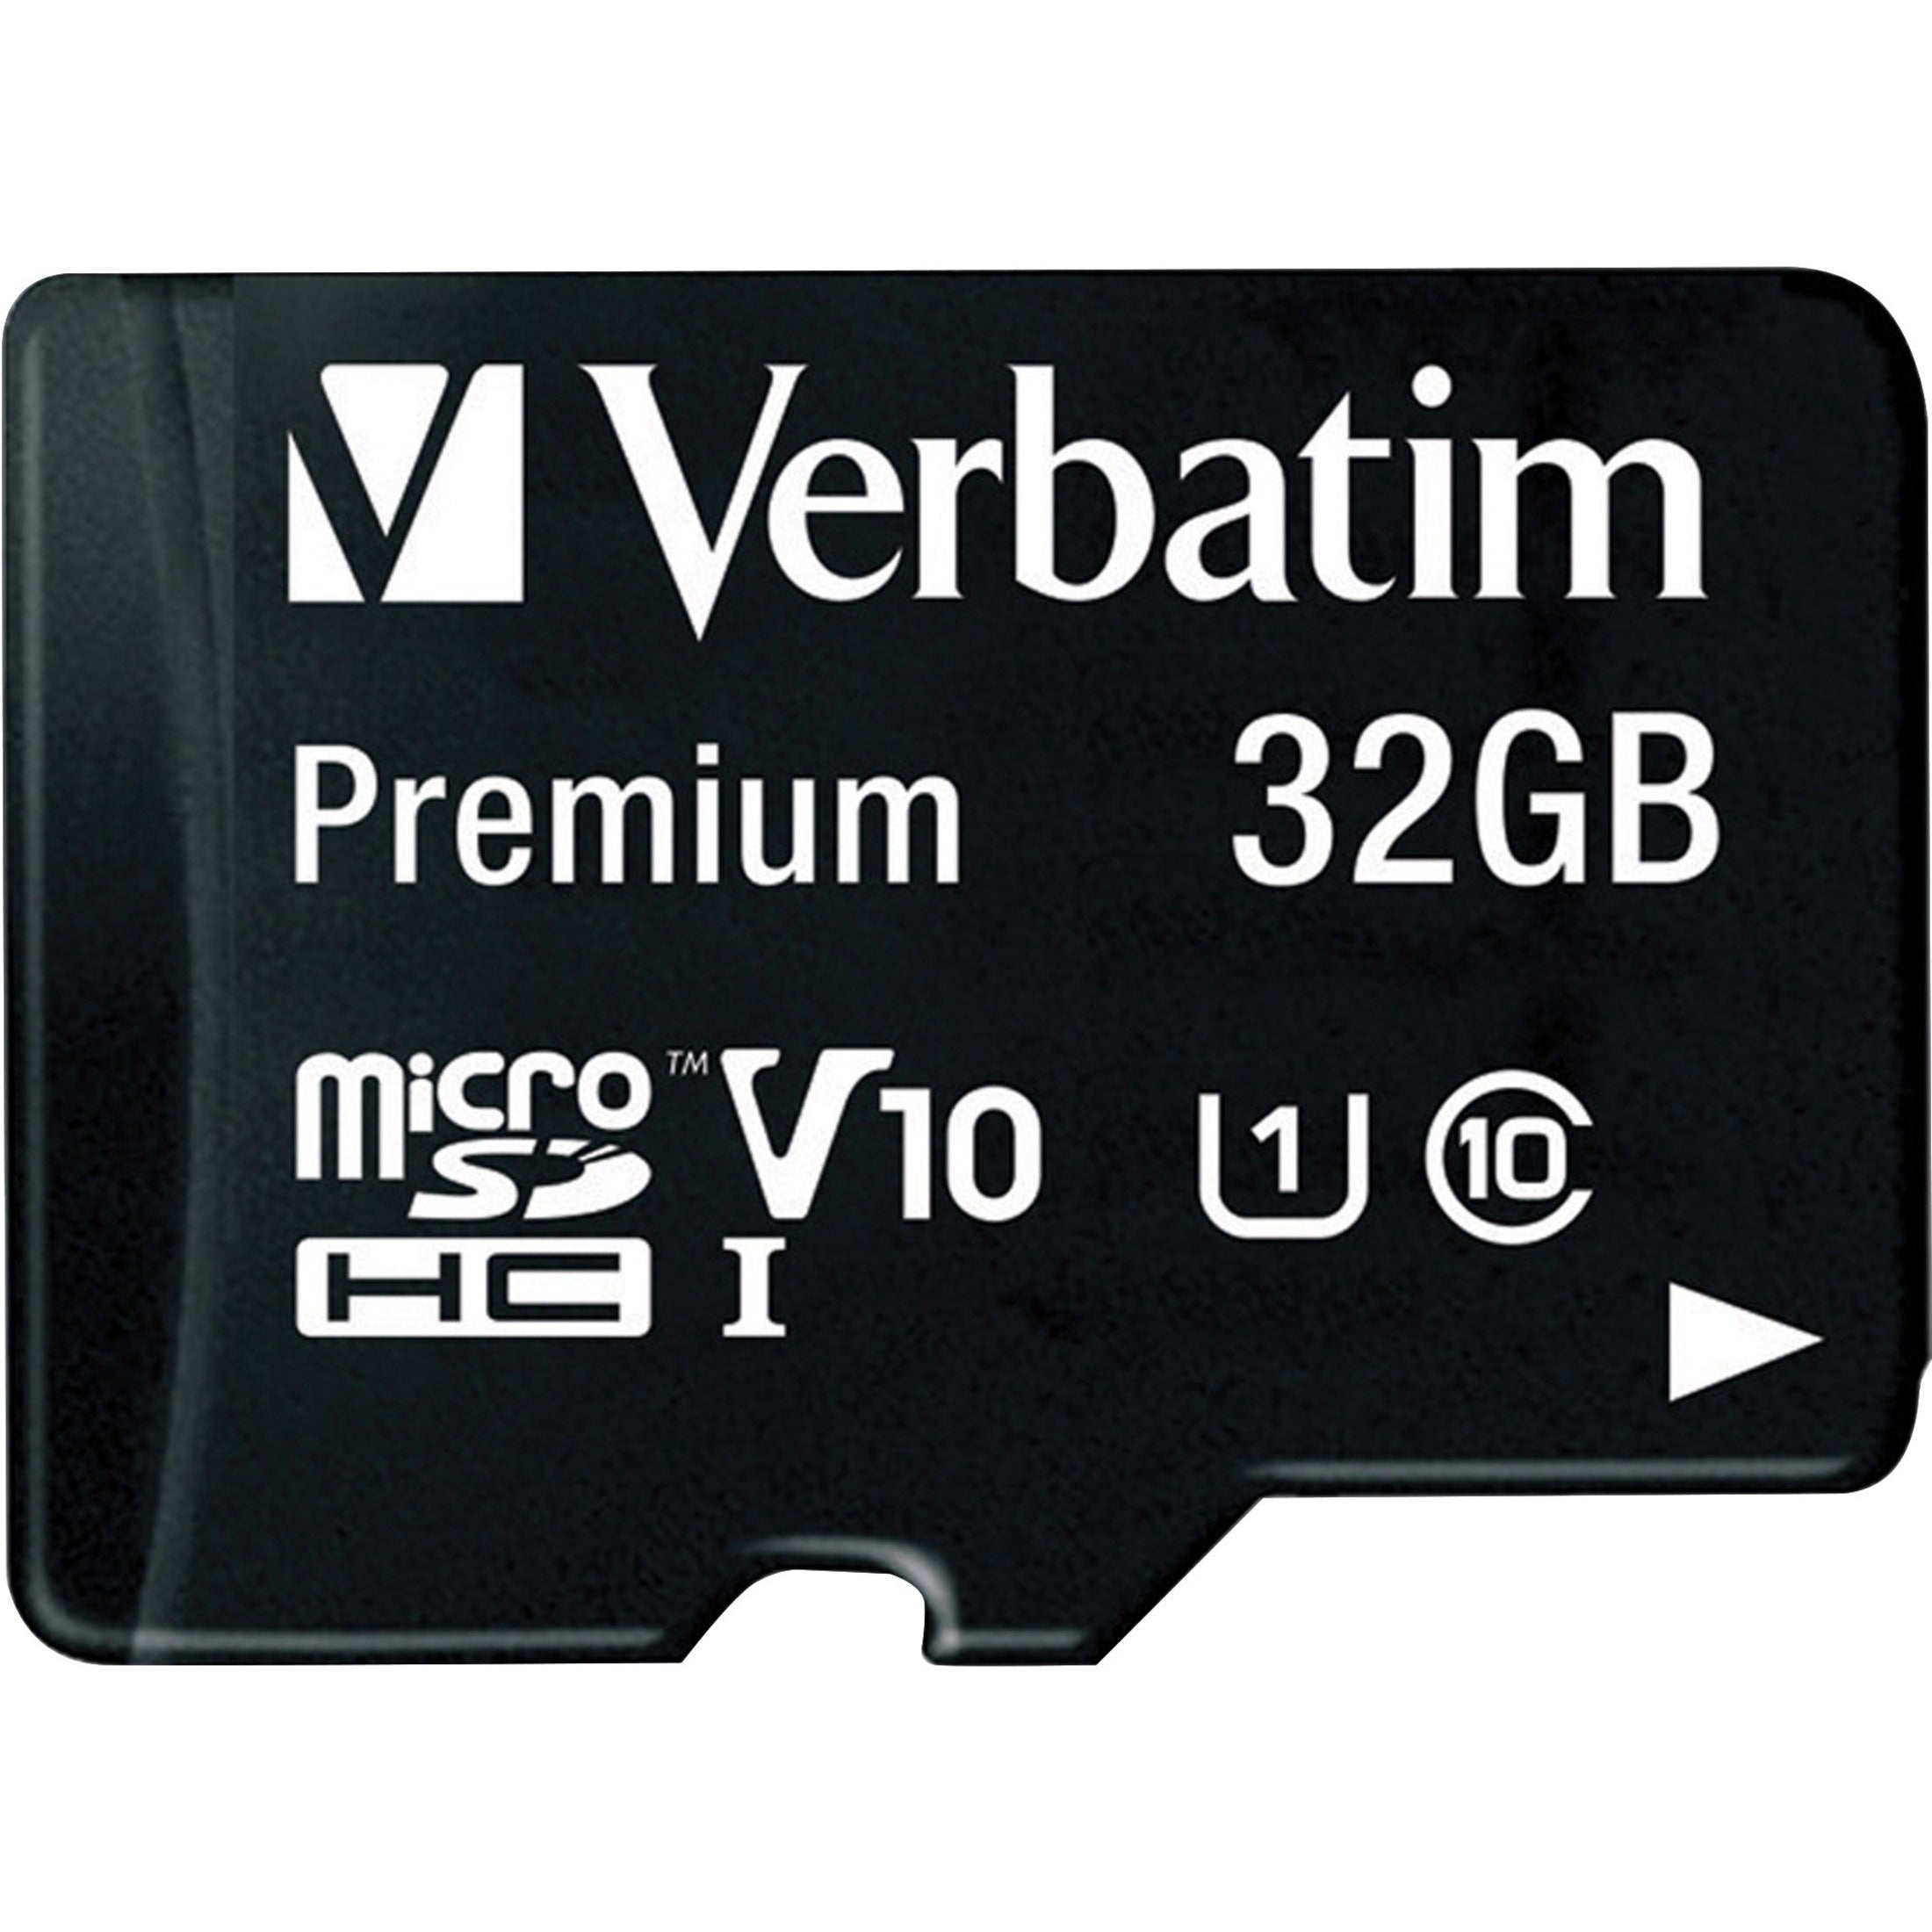 Verbatim 44083 Mirco SD card, 32GB, Class 10/UHS-I (U1), Lifetime Warranty